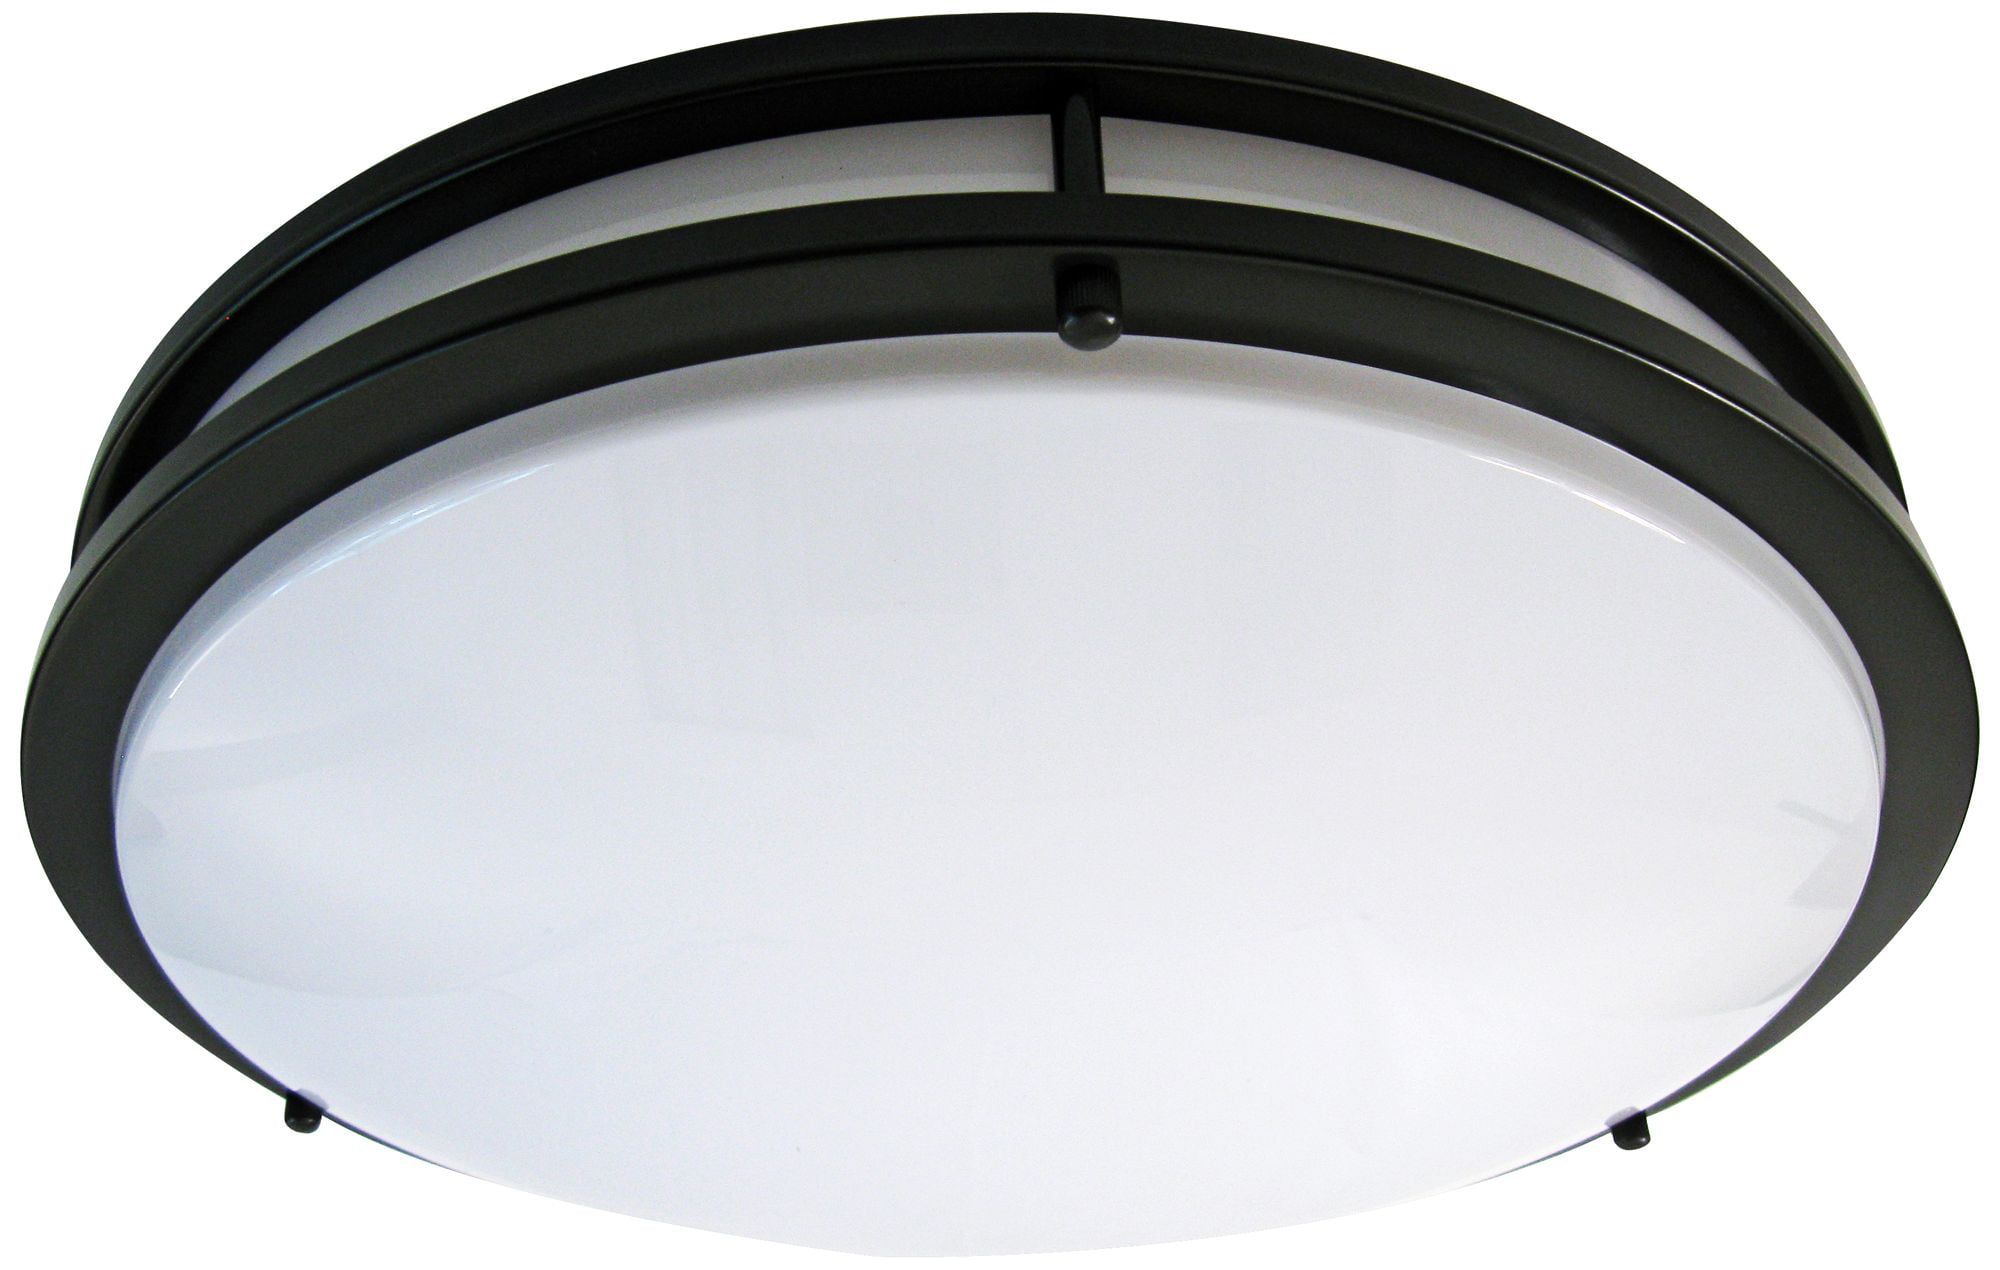 Zaire 18" Bronze Flushmount LED Ceiling Light with Acrylic Shade